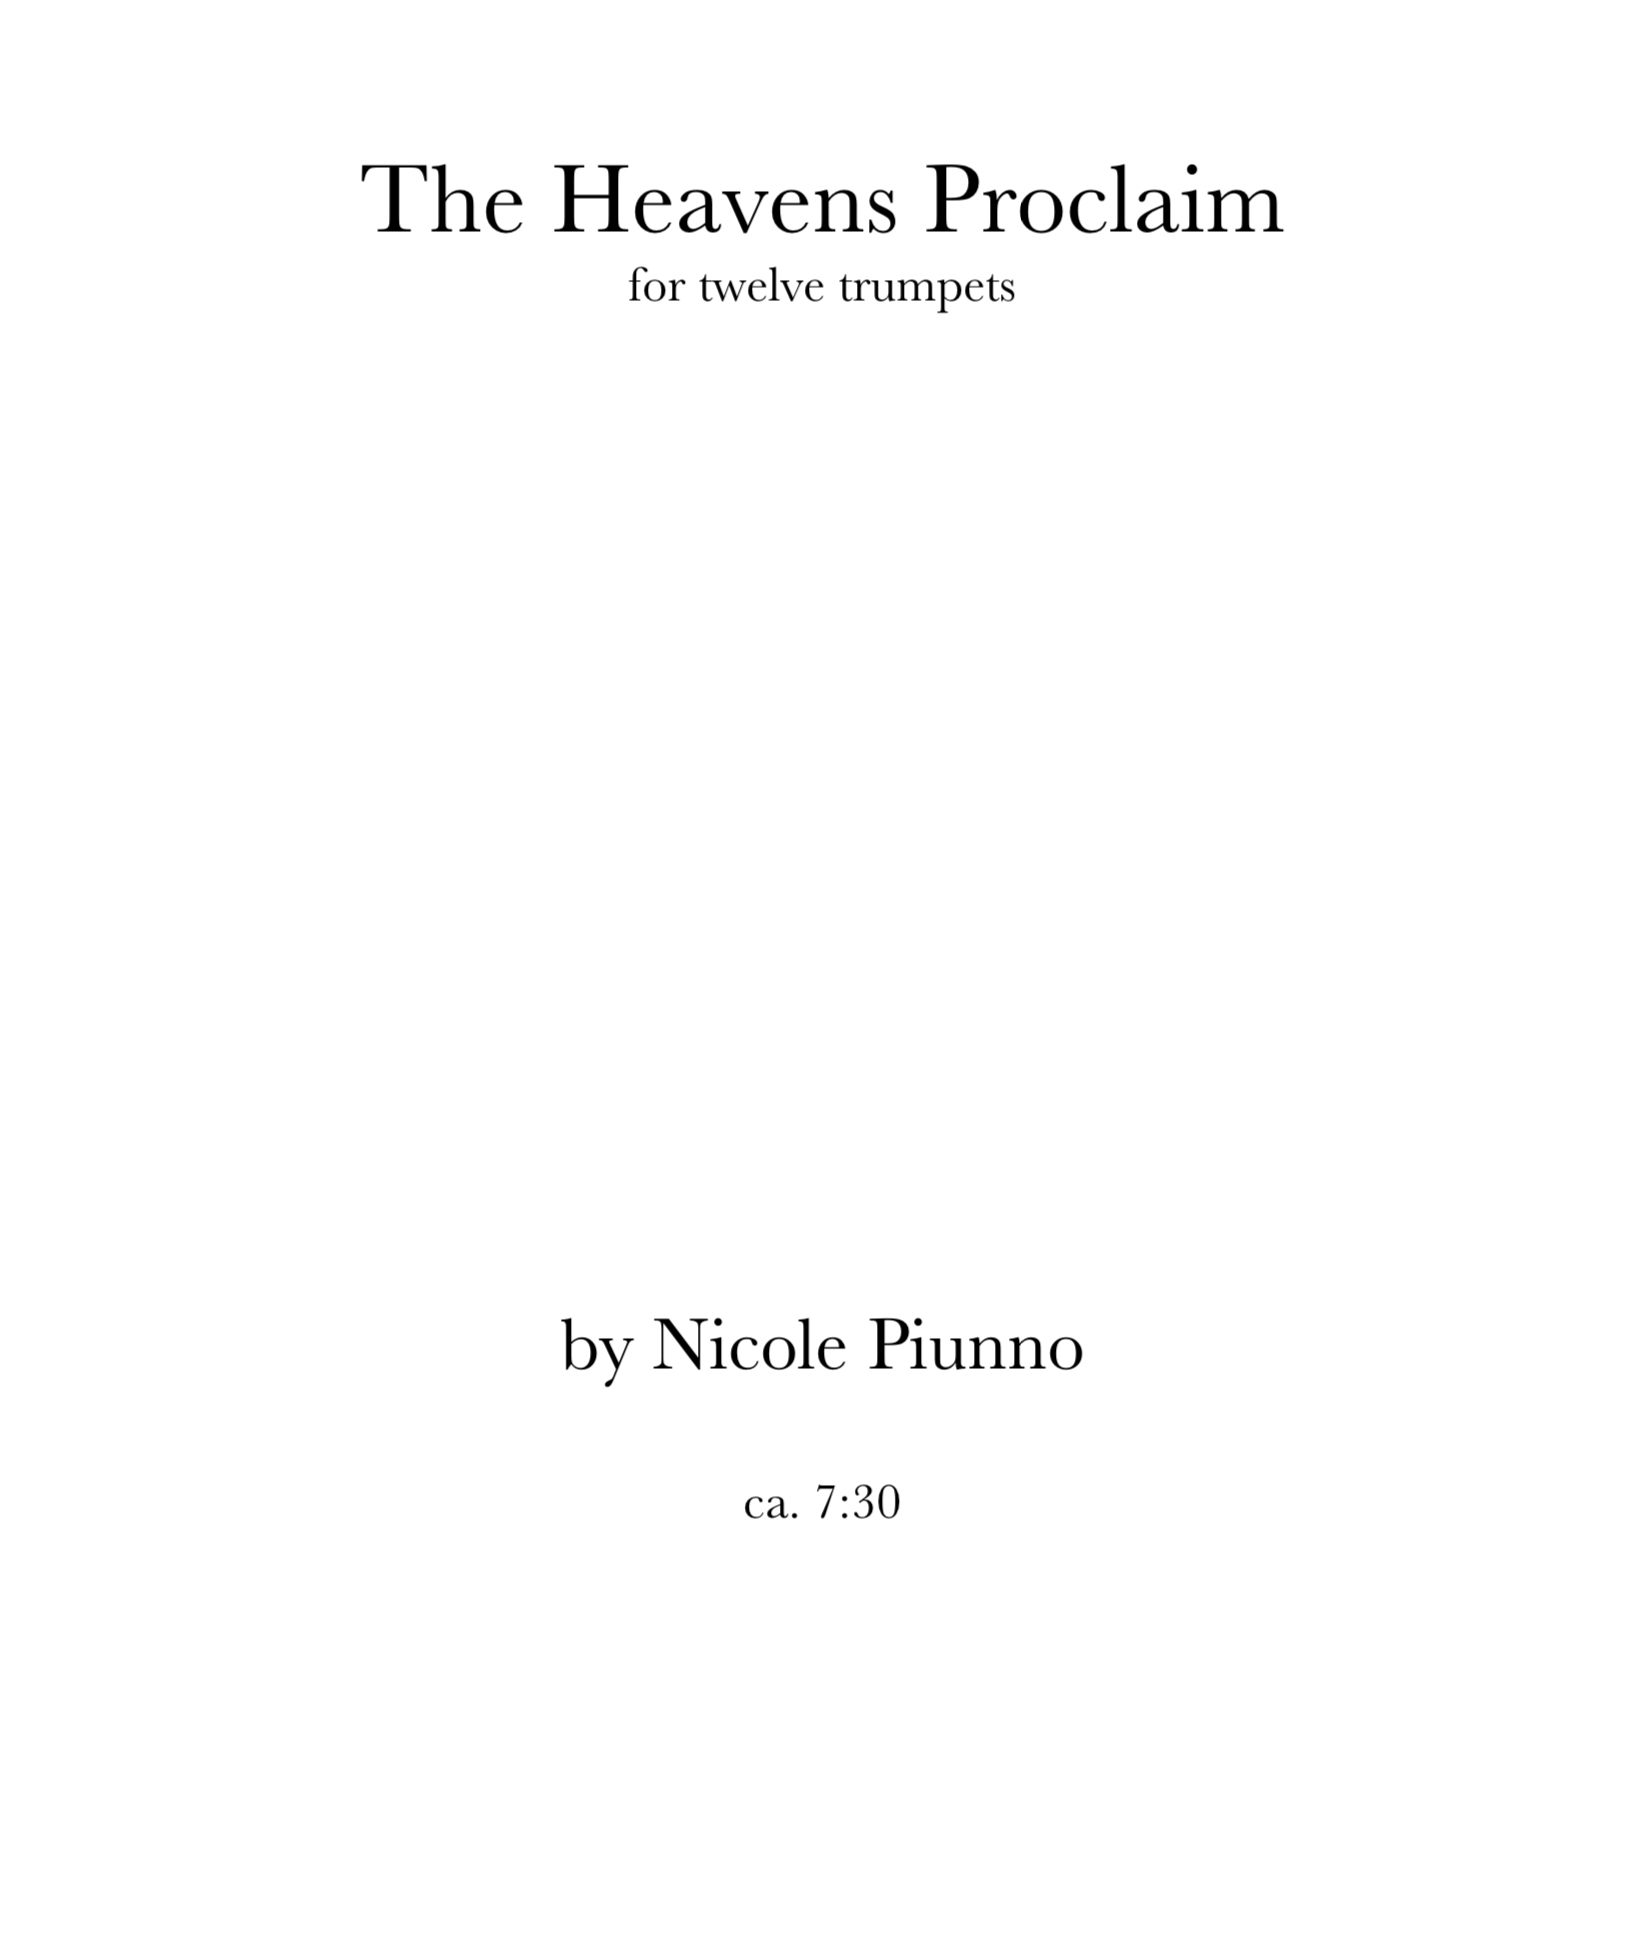 The Heavens Proclaim by Nicole Piunno